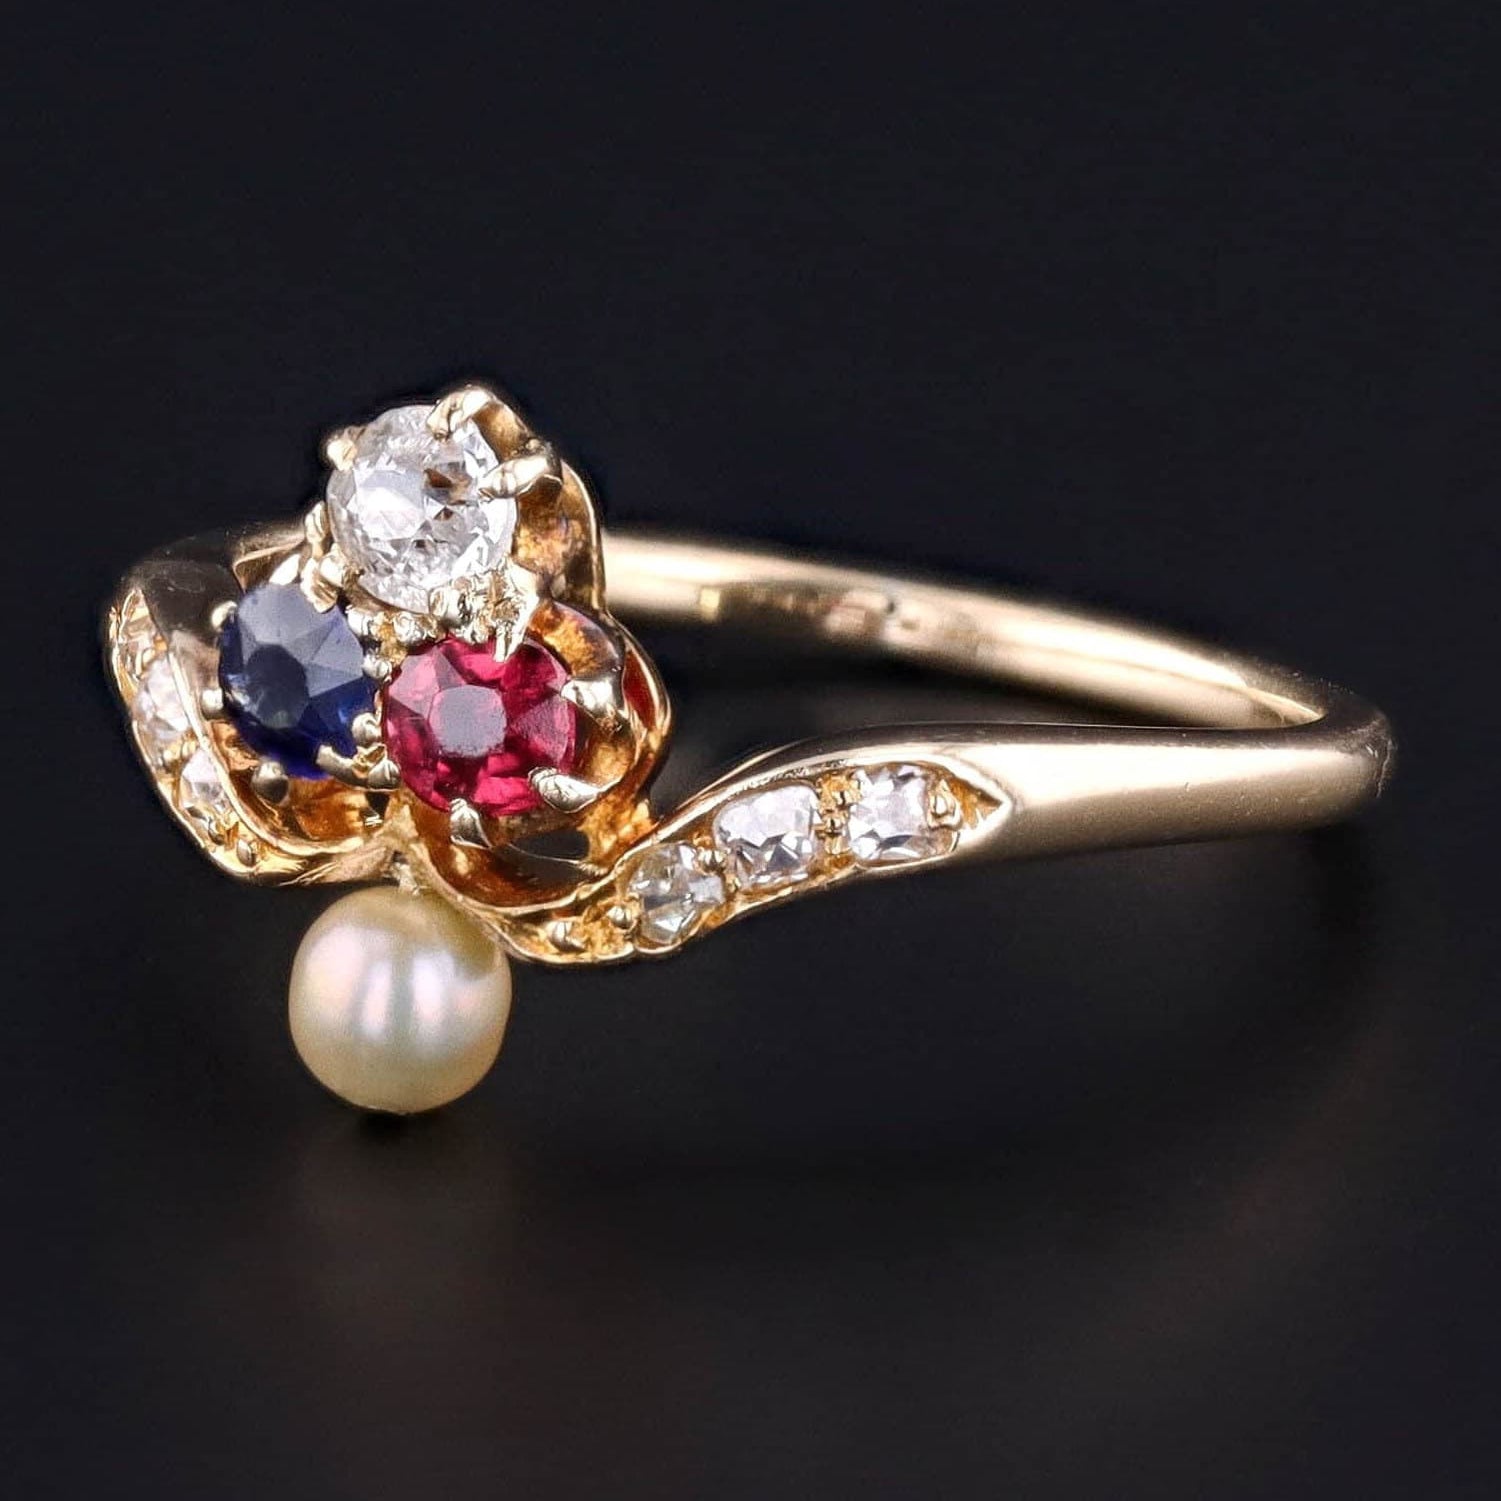 Antique Victorian Gemstone Ring of 18k Gold